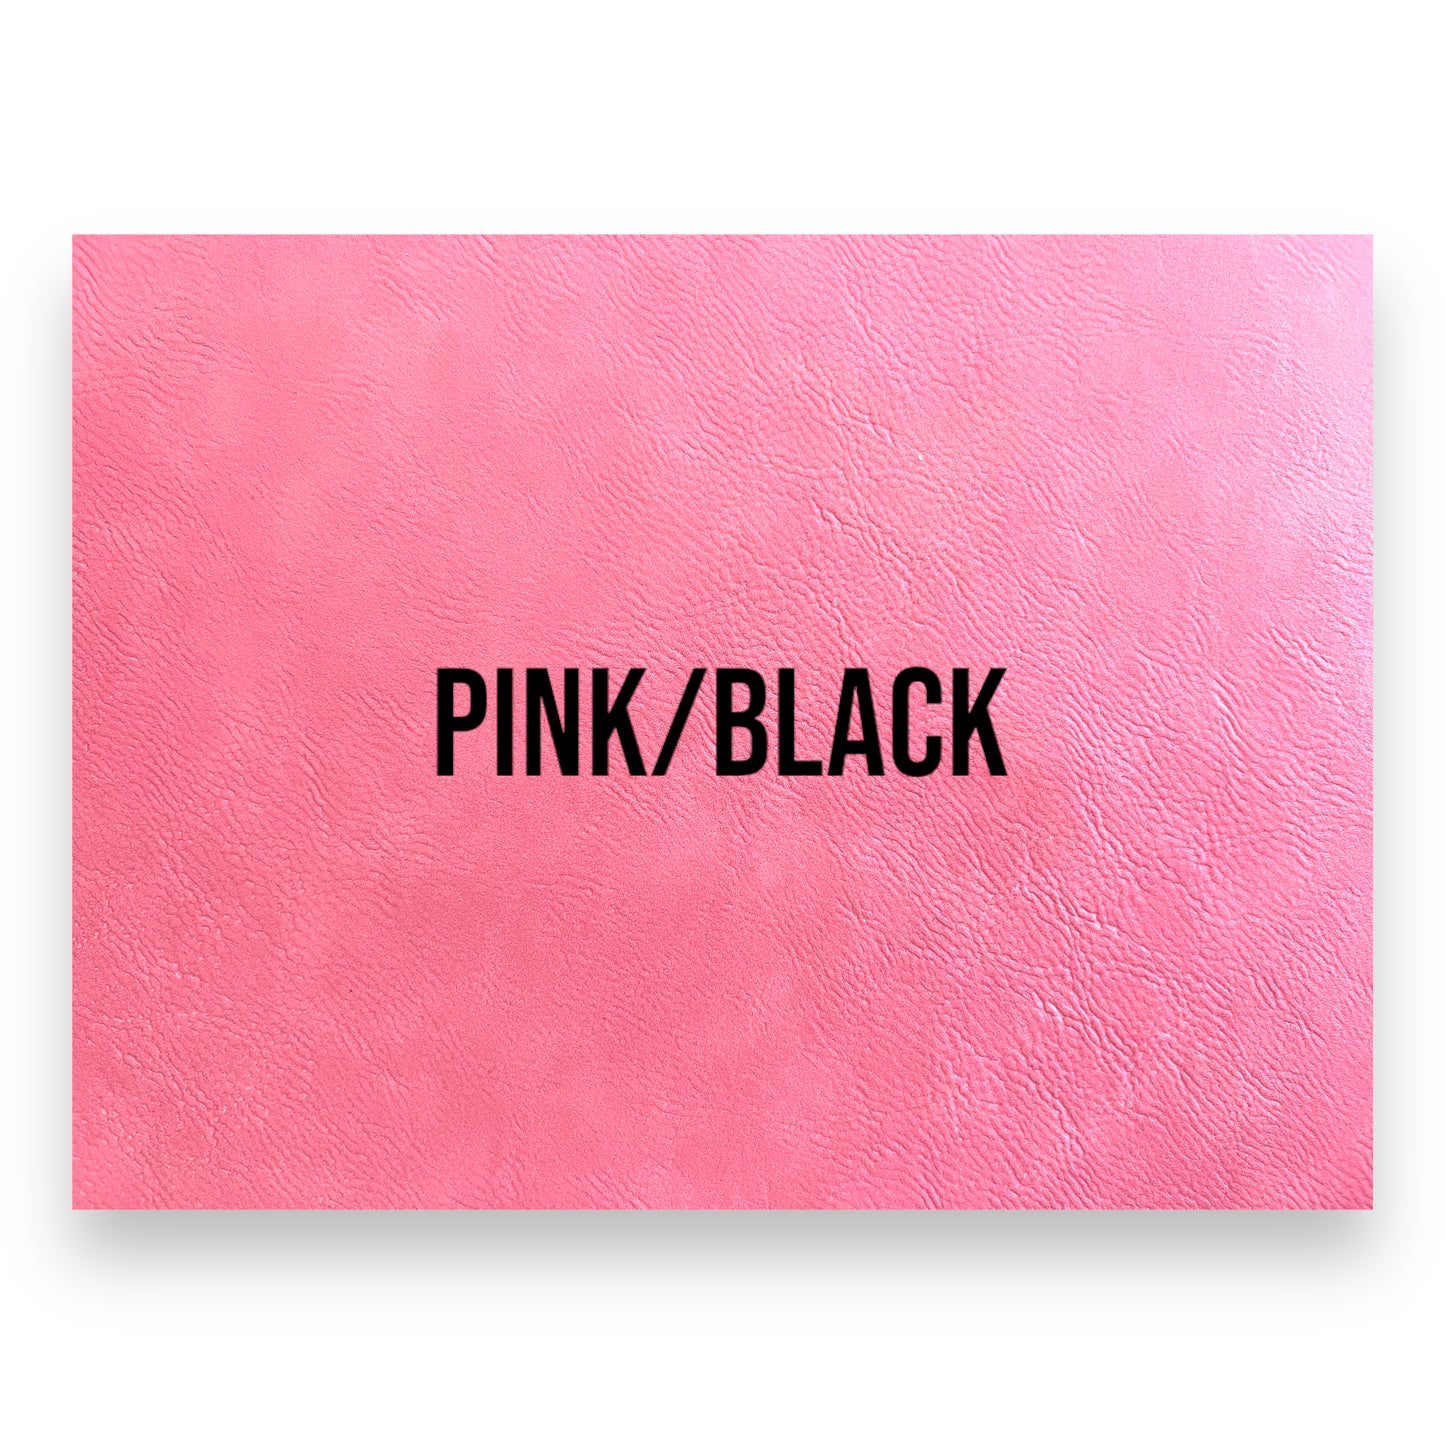 PINK/BLACK HYDBOND’D LEATHERETTE SHEET (12"x24")